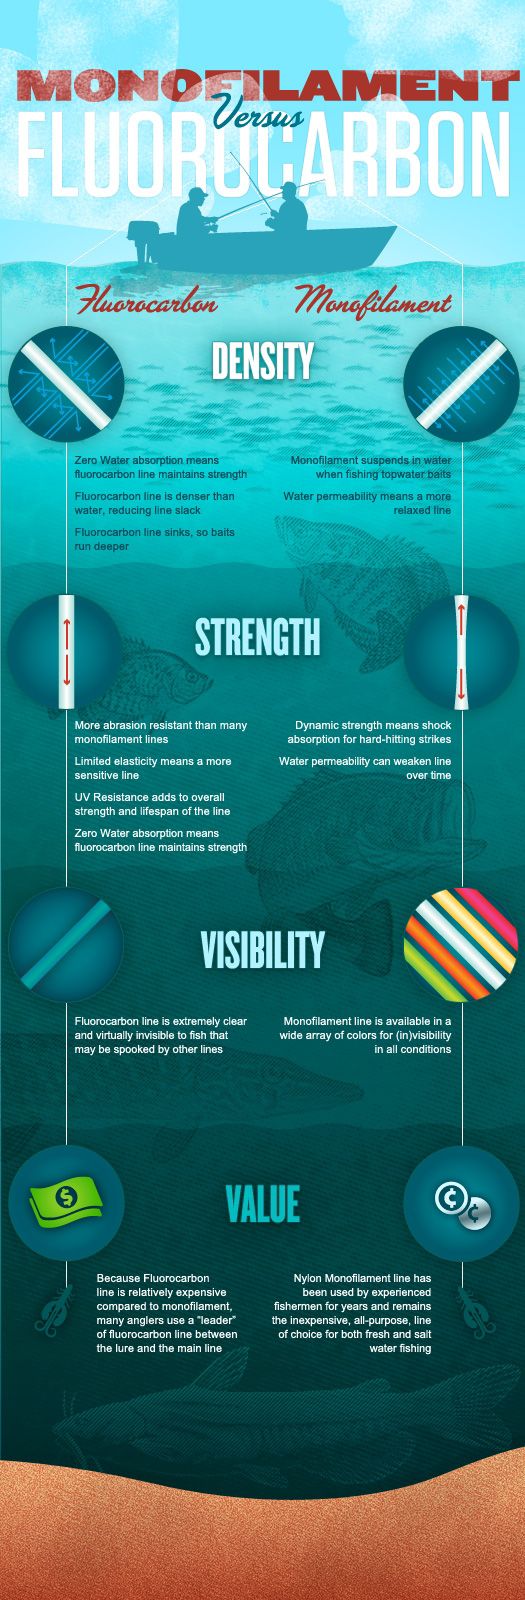 Monofilament vs Fluorocarbon Fishing Line (Infographic)